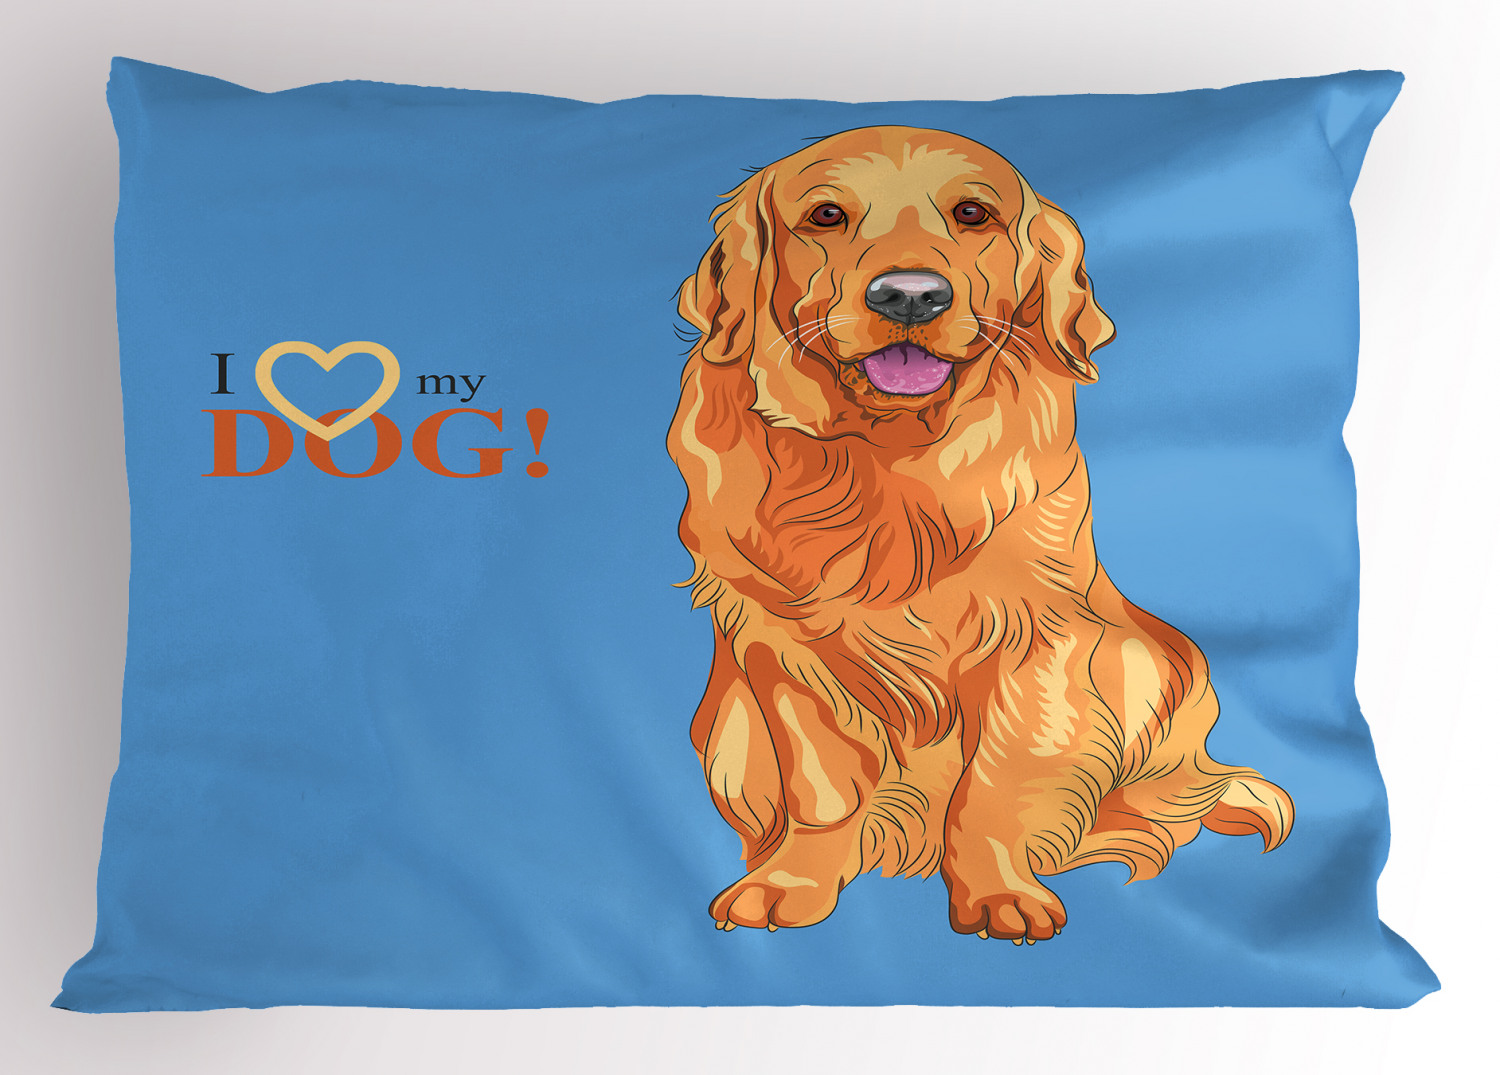 Dog Pillow Sham Decorative Pillowcase 3 Sizes Available for Bedroom Decor 